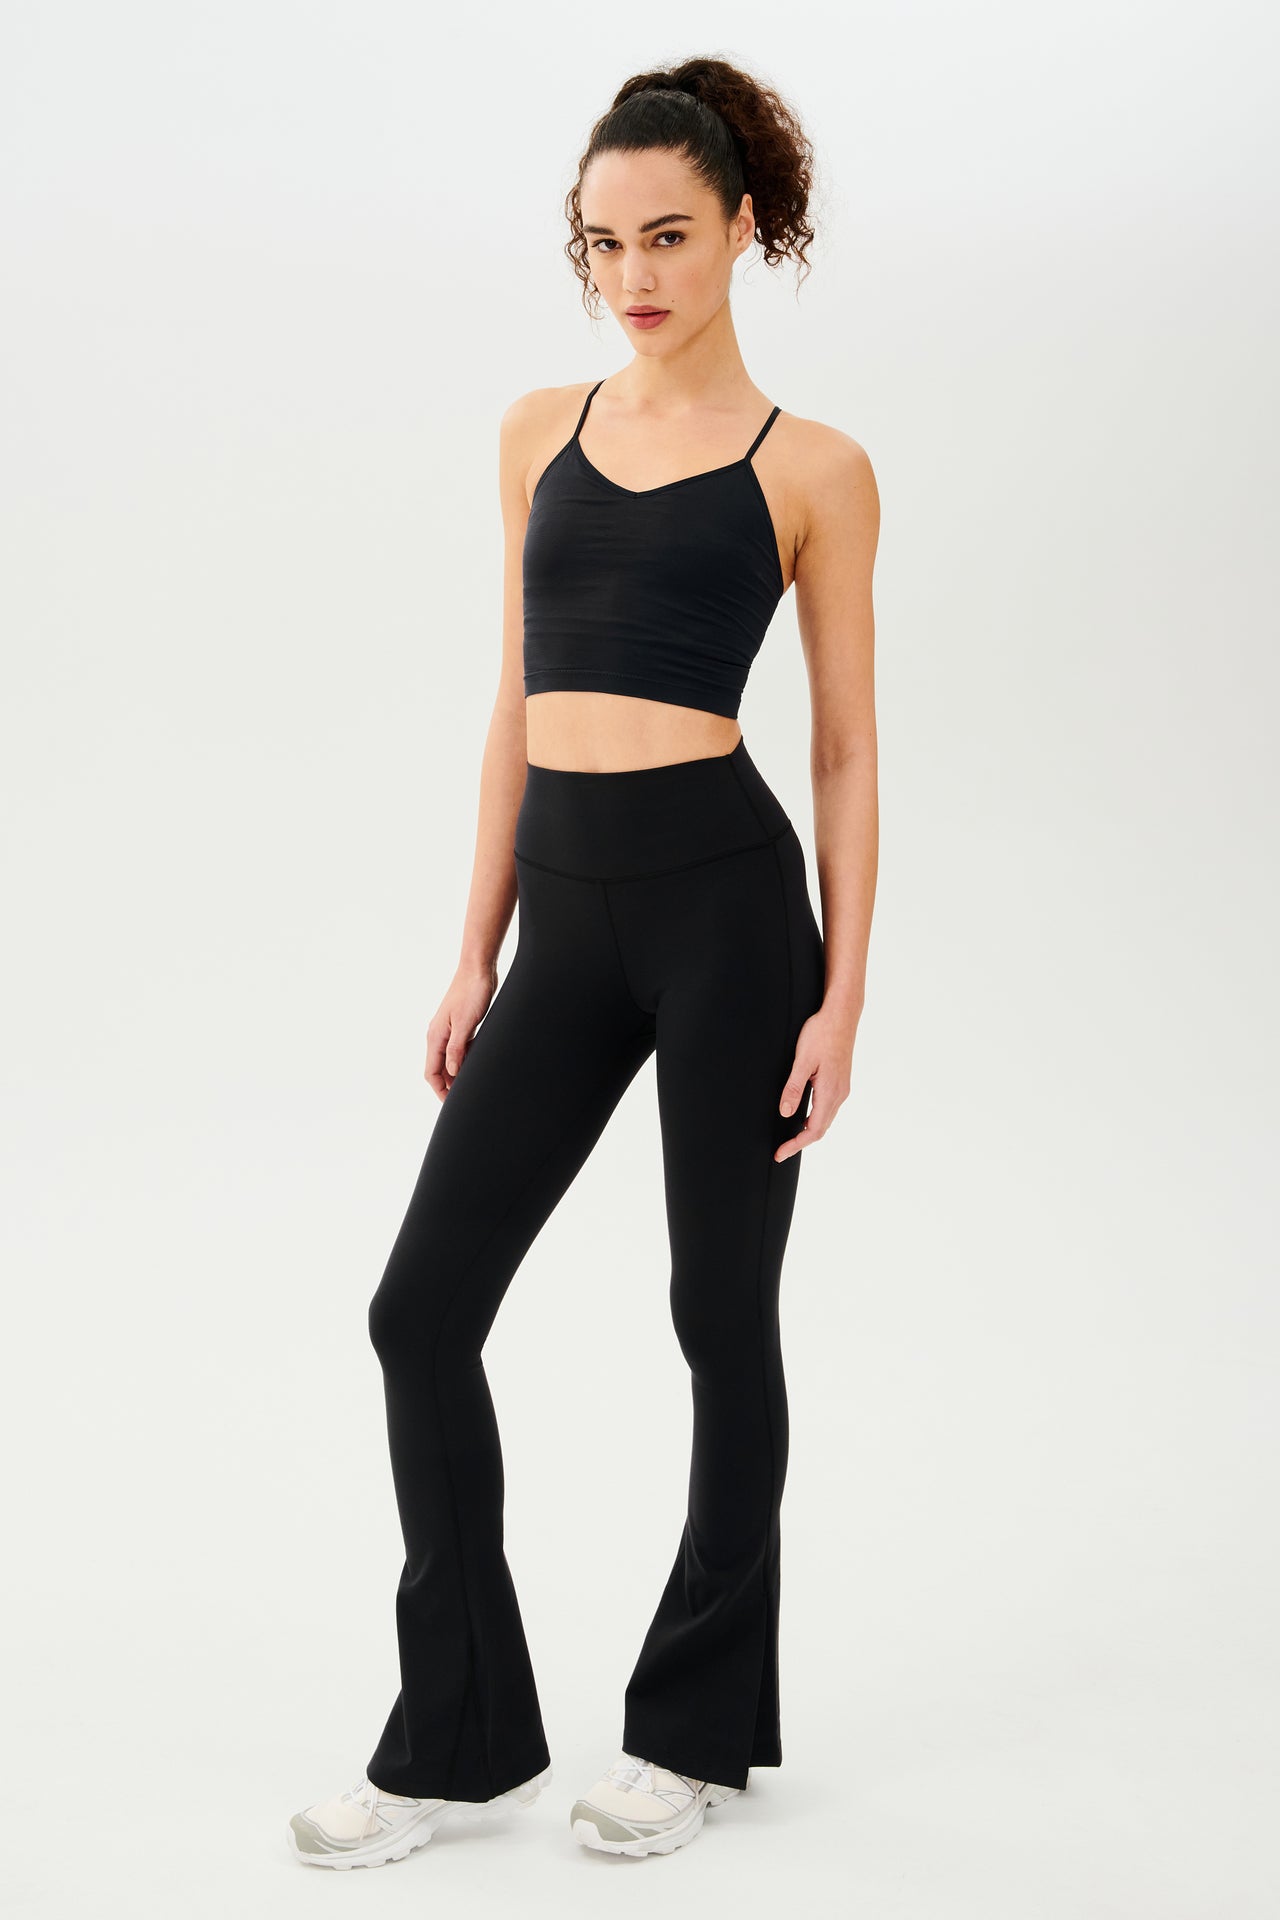 A woman wearing black leggings and a Splits59 Loren Seamless Cami - Black with a built-in shelf bra.